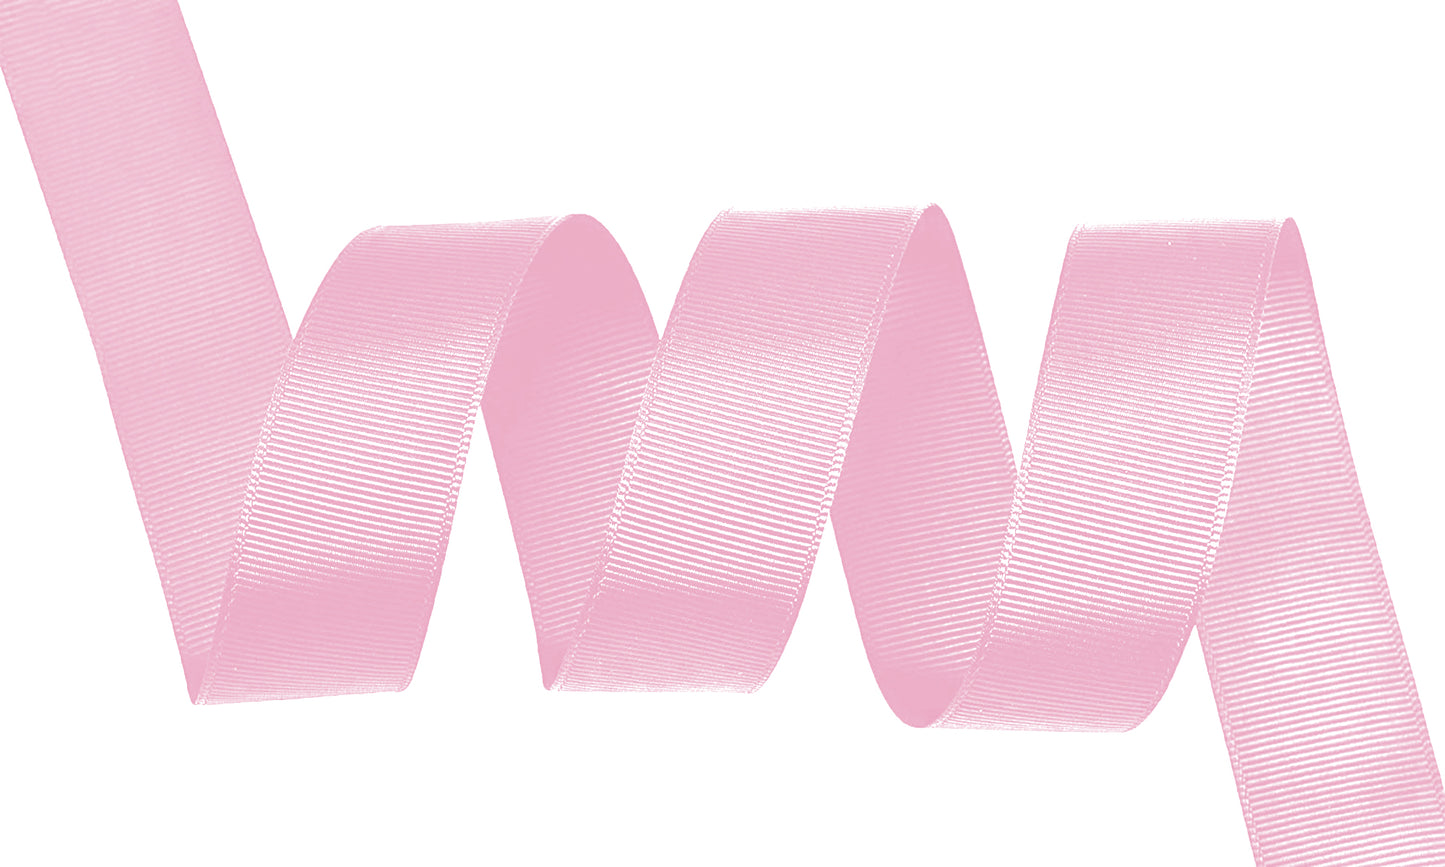 5 Yards Solid Light Pink Grosgrain Ribbon Yardage DIY Crafts Bows Décor USA